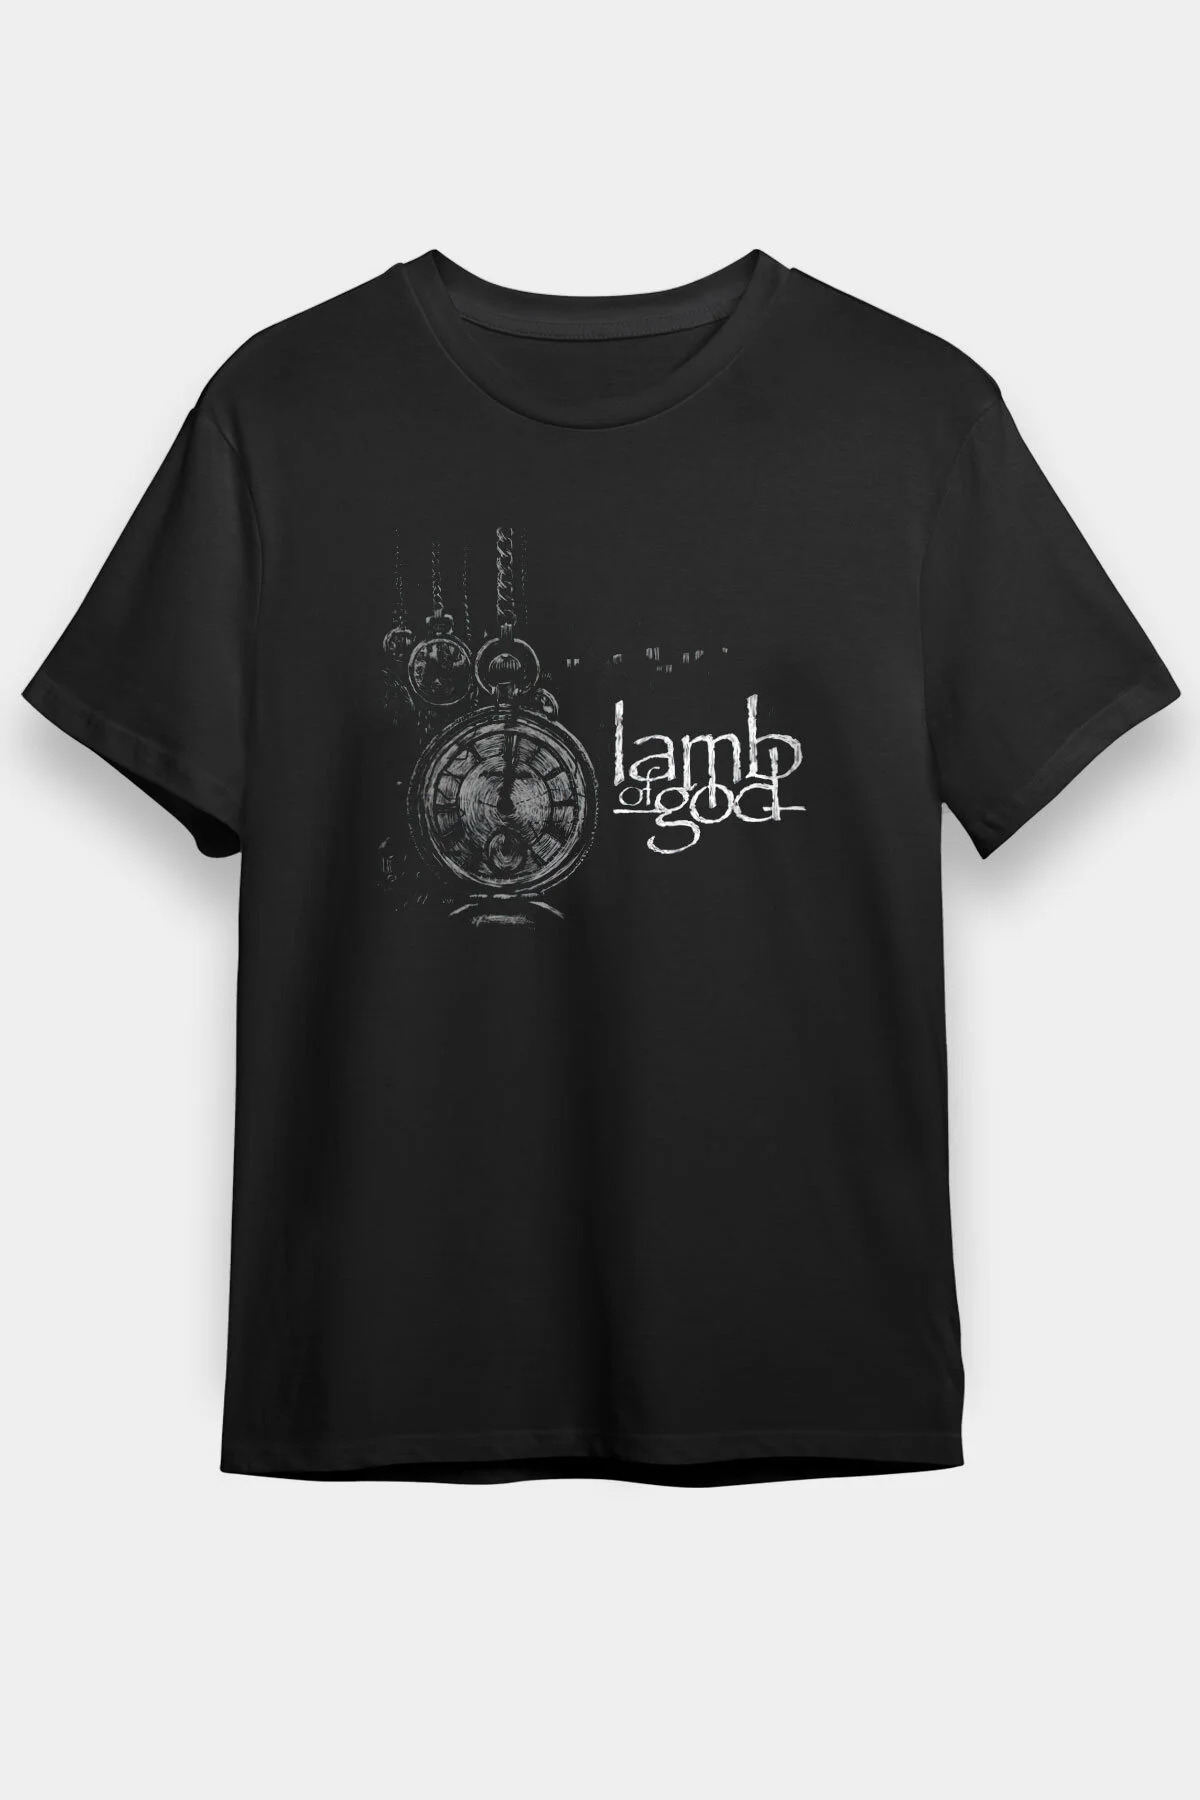 Lamb of God T shirt , Music Band ,Unisex Tshirt 09/